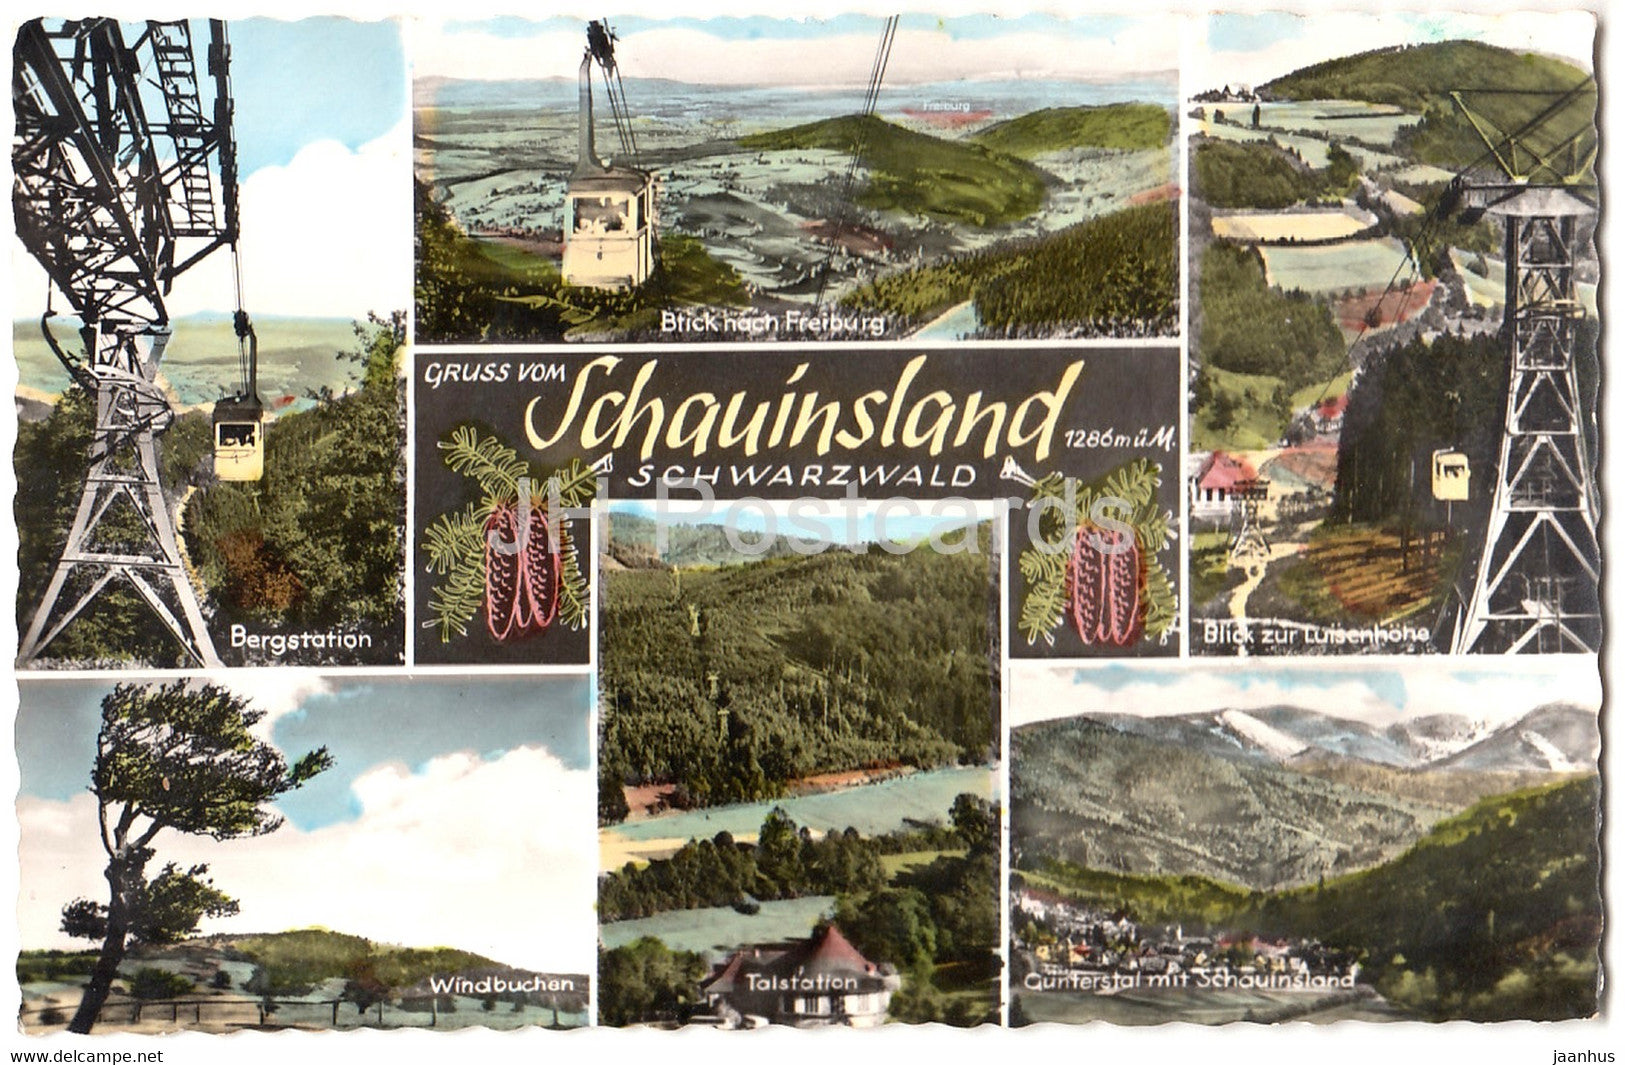 Gruss vom Schauinsland - Schwarzwald - Bergstation - Freiburg - Talstation - Germany - unused - JH Postcards